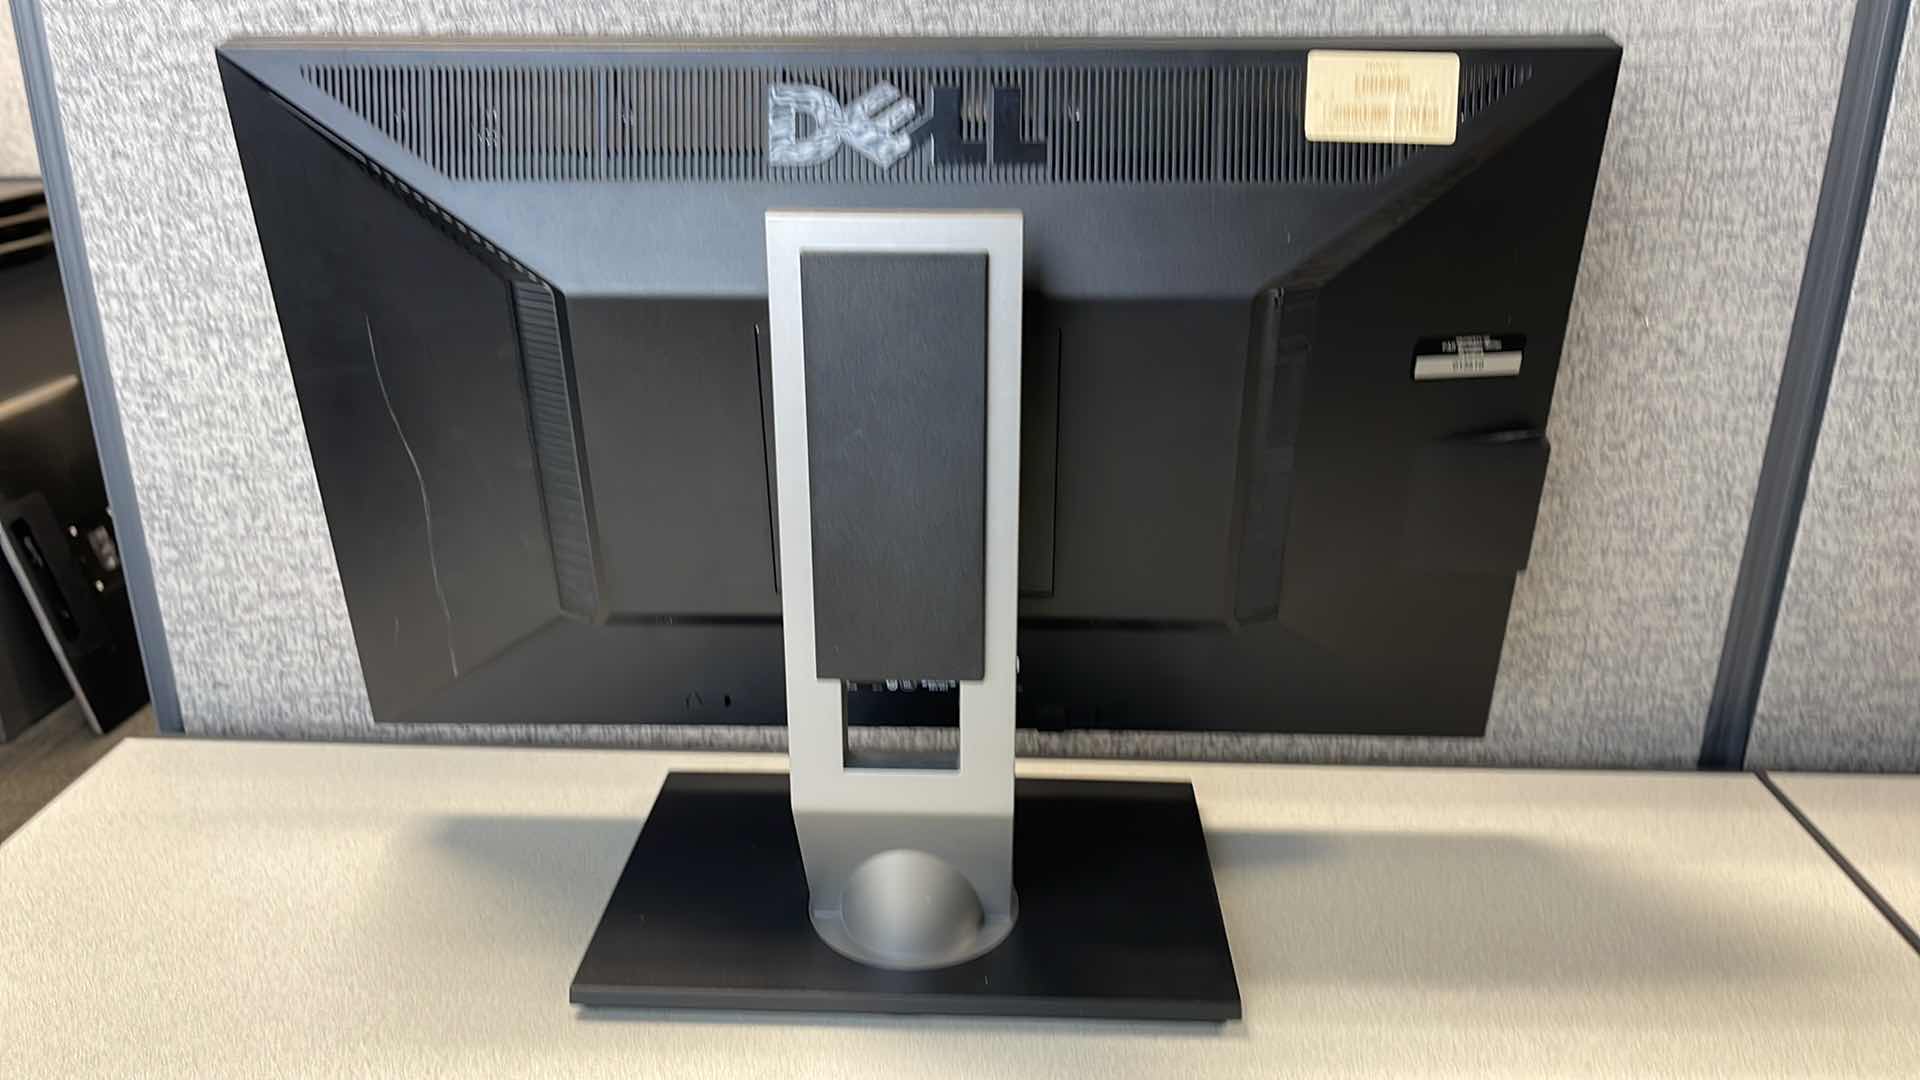 Photo 2 of DELL 23” COMPUTER MONITOR